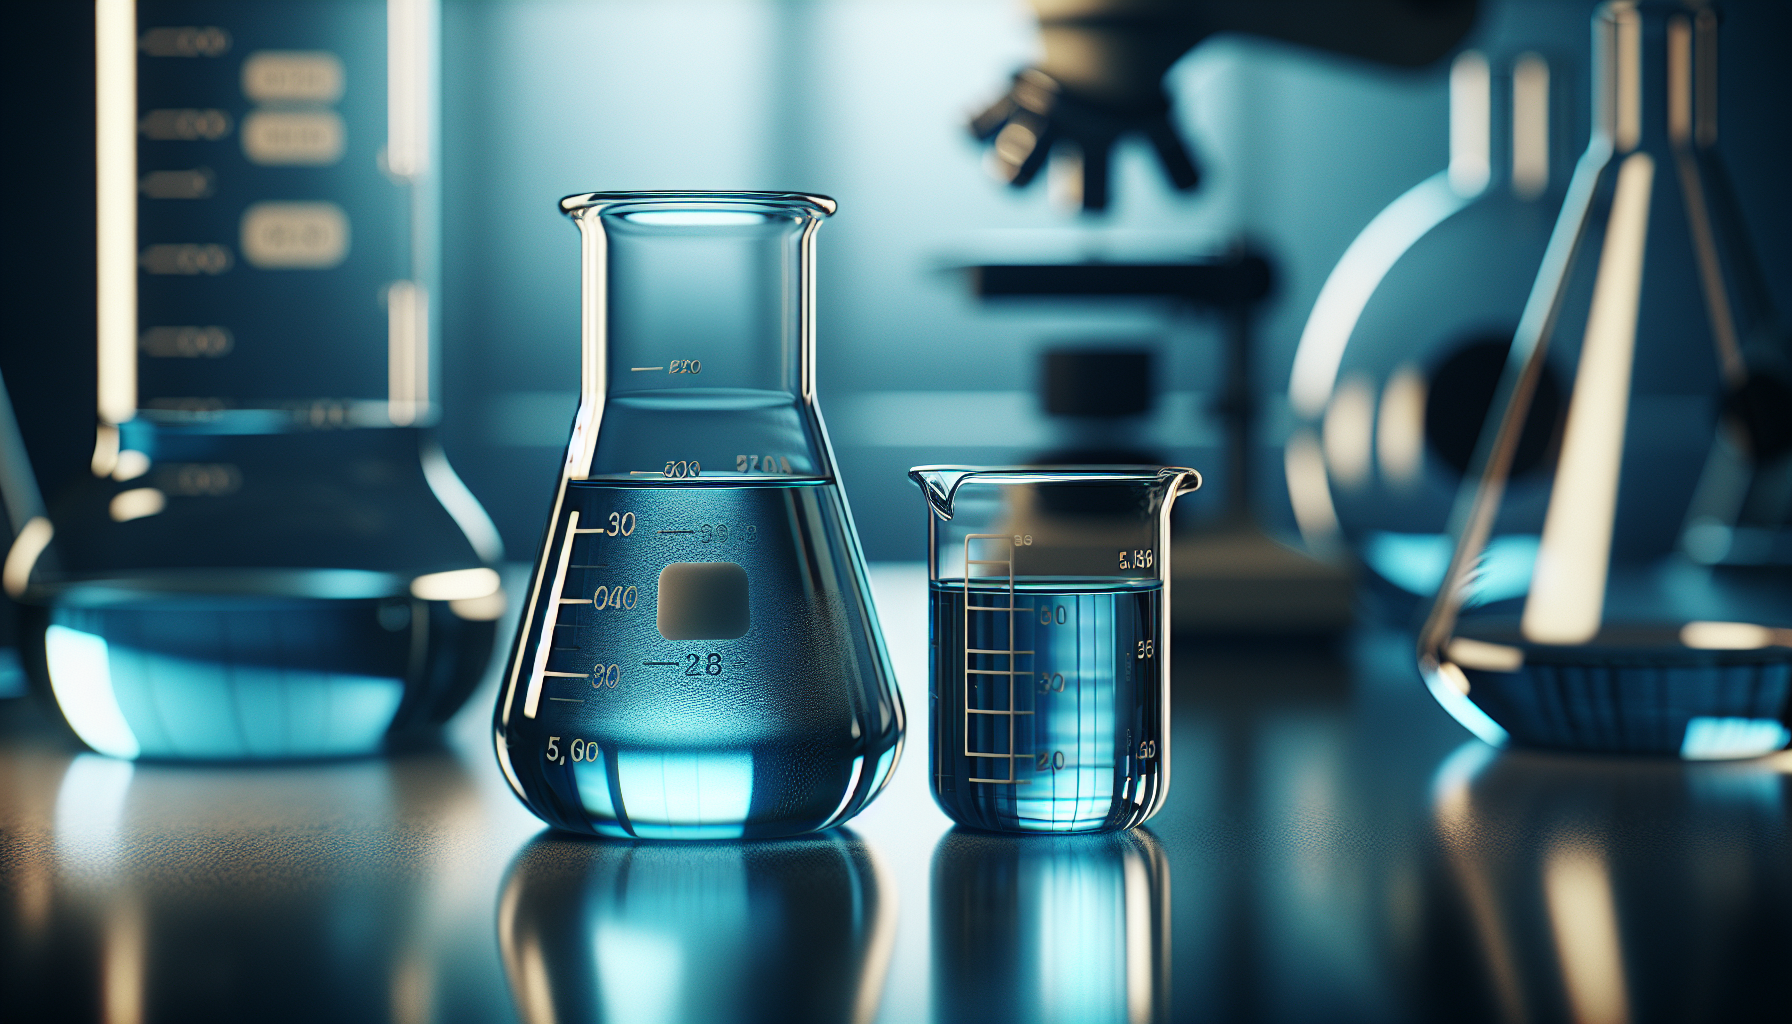 A comparison image of borosilicate glass and plastic beakers